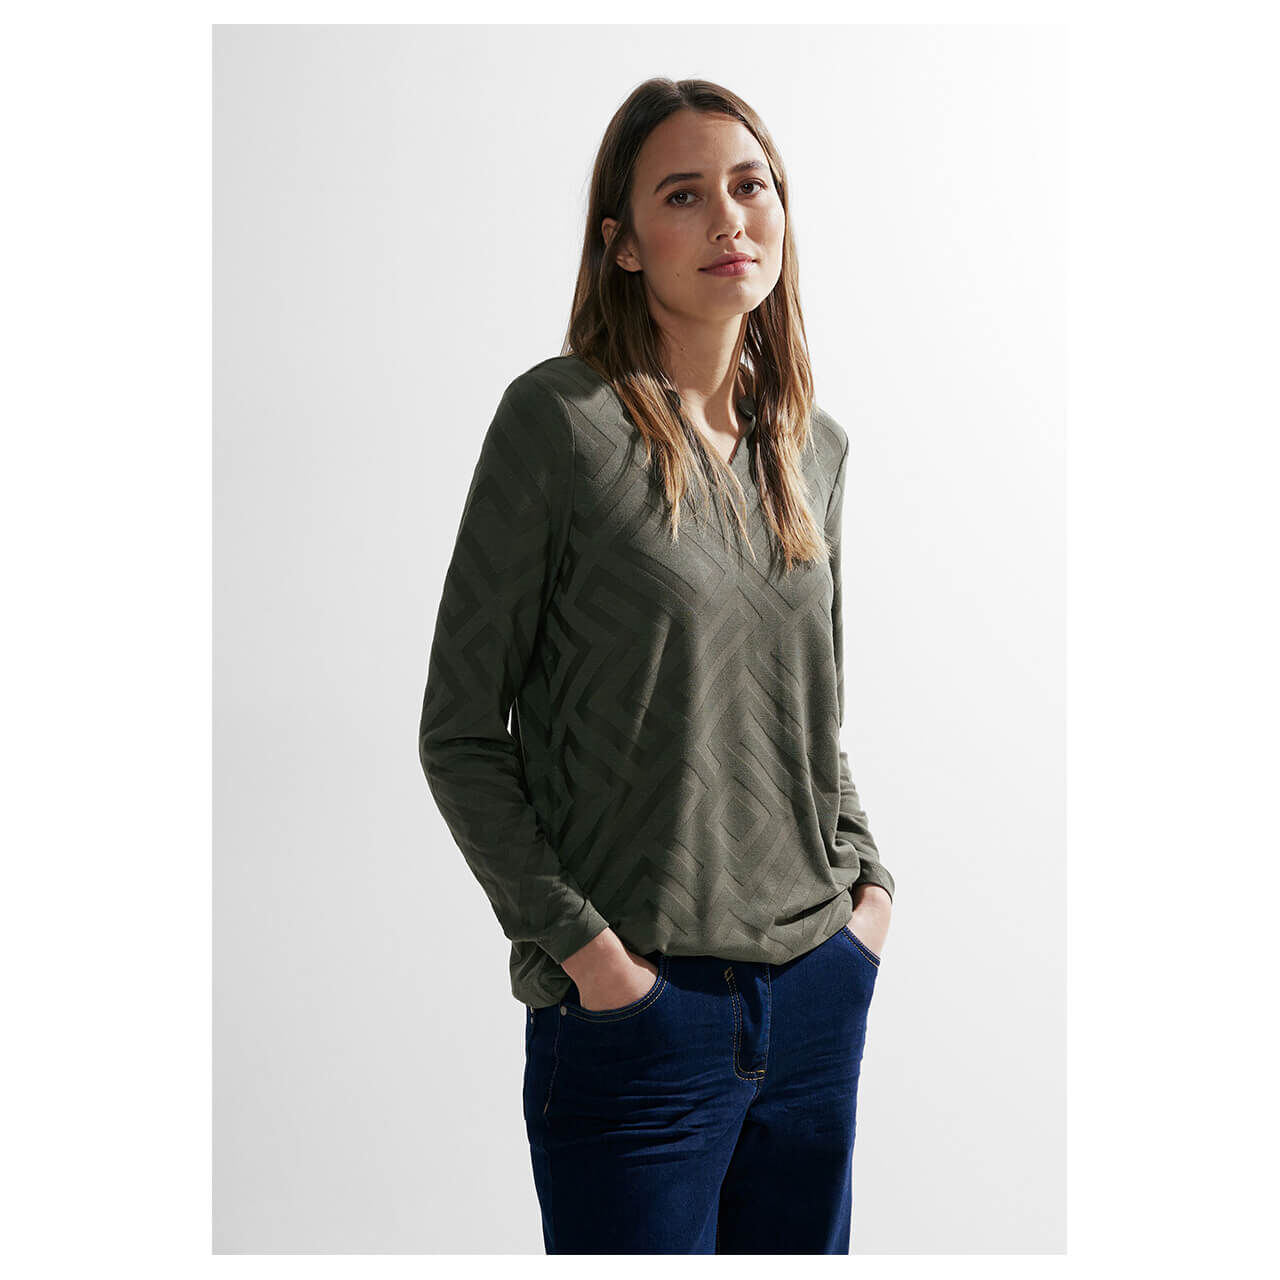 Cecil Damen Langarm Shirt Solid Jacquard Tunic dynamic khaki